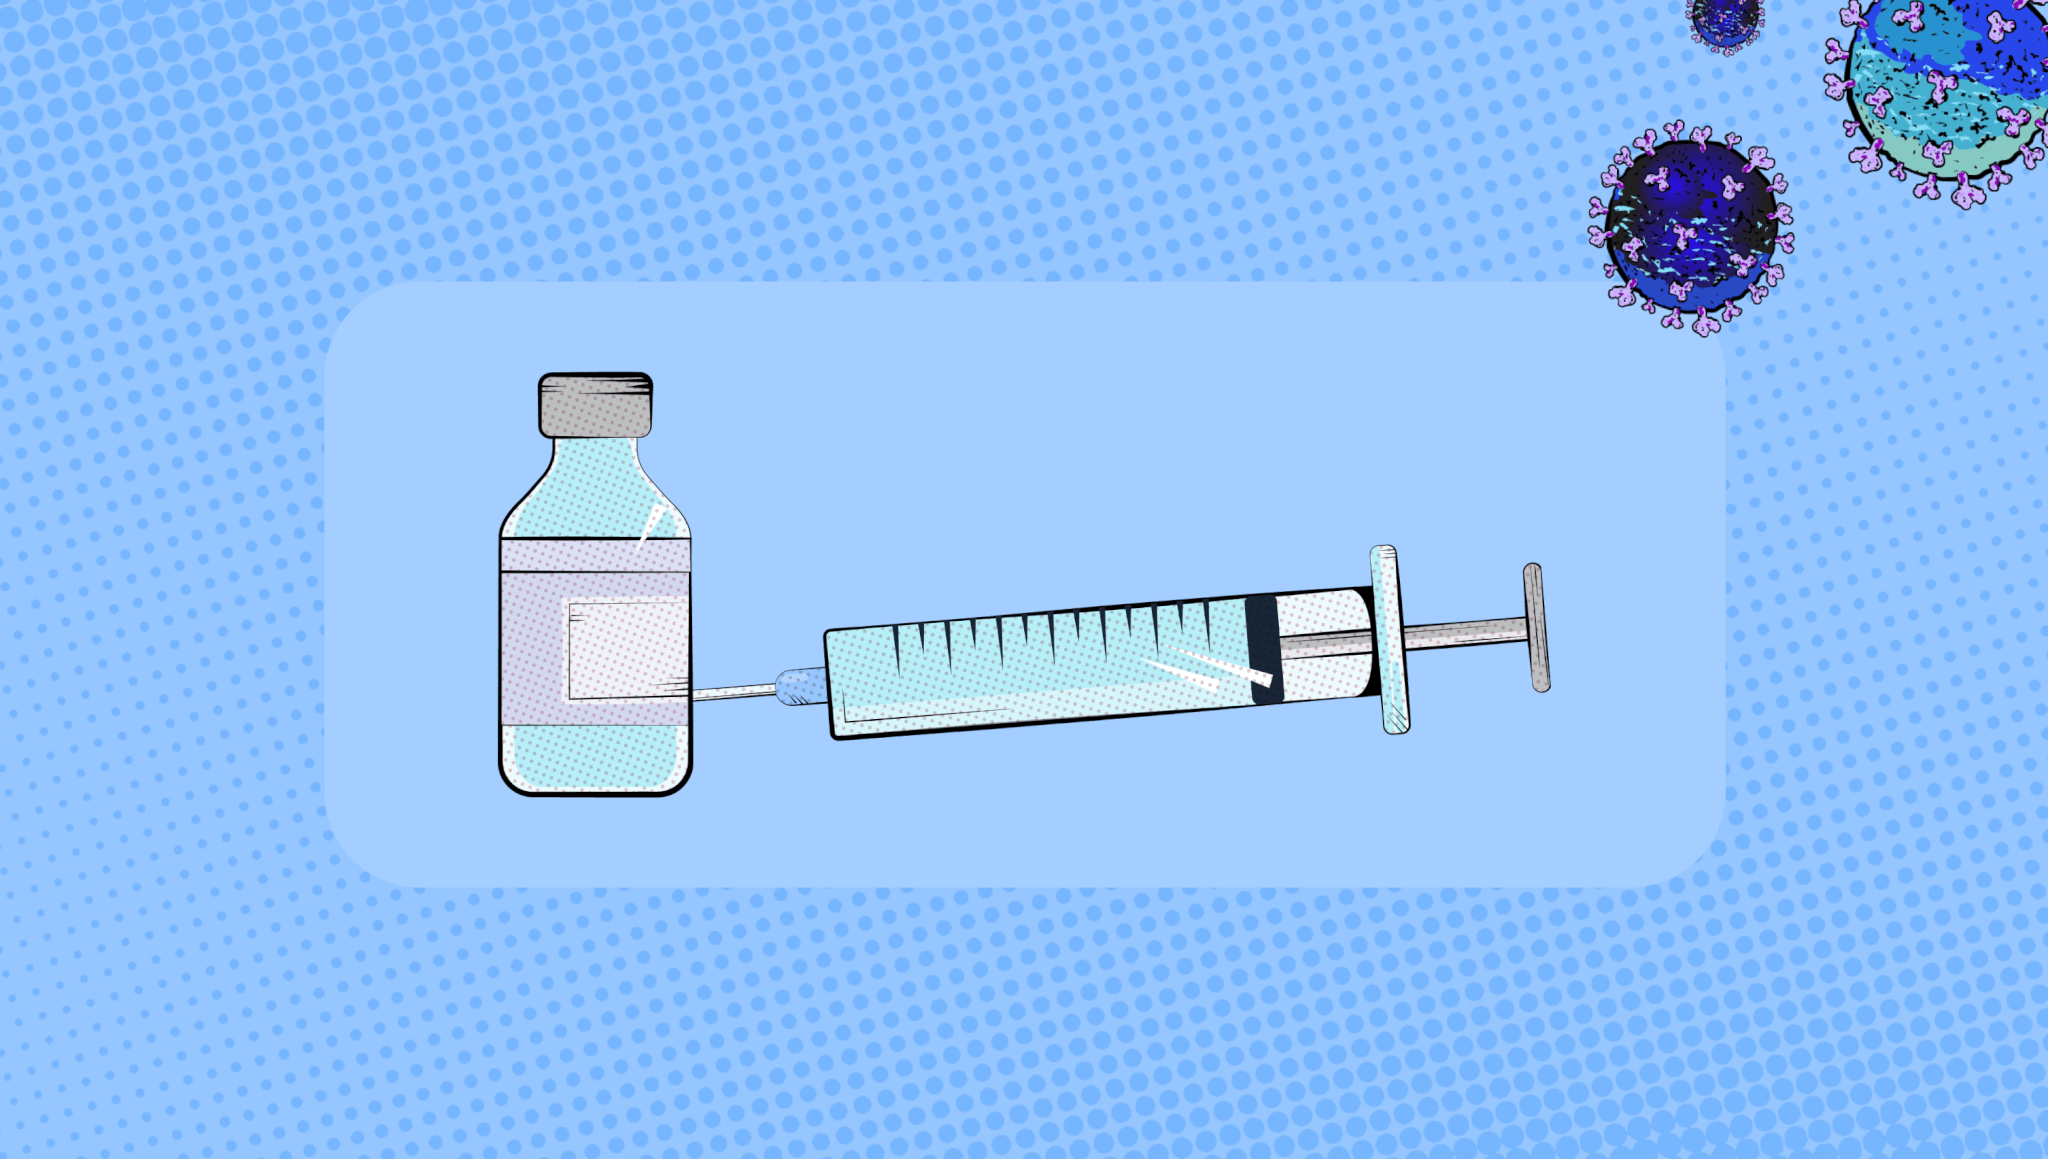 covid-19 vaccine vial and syringe illustration